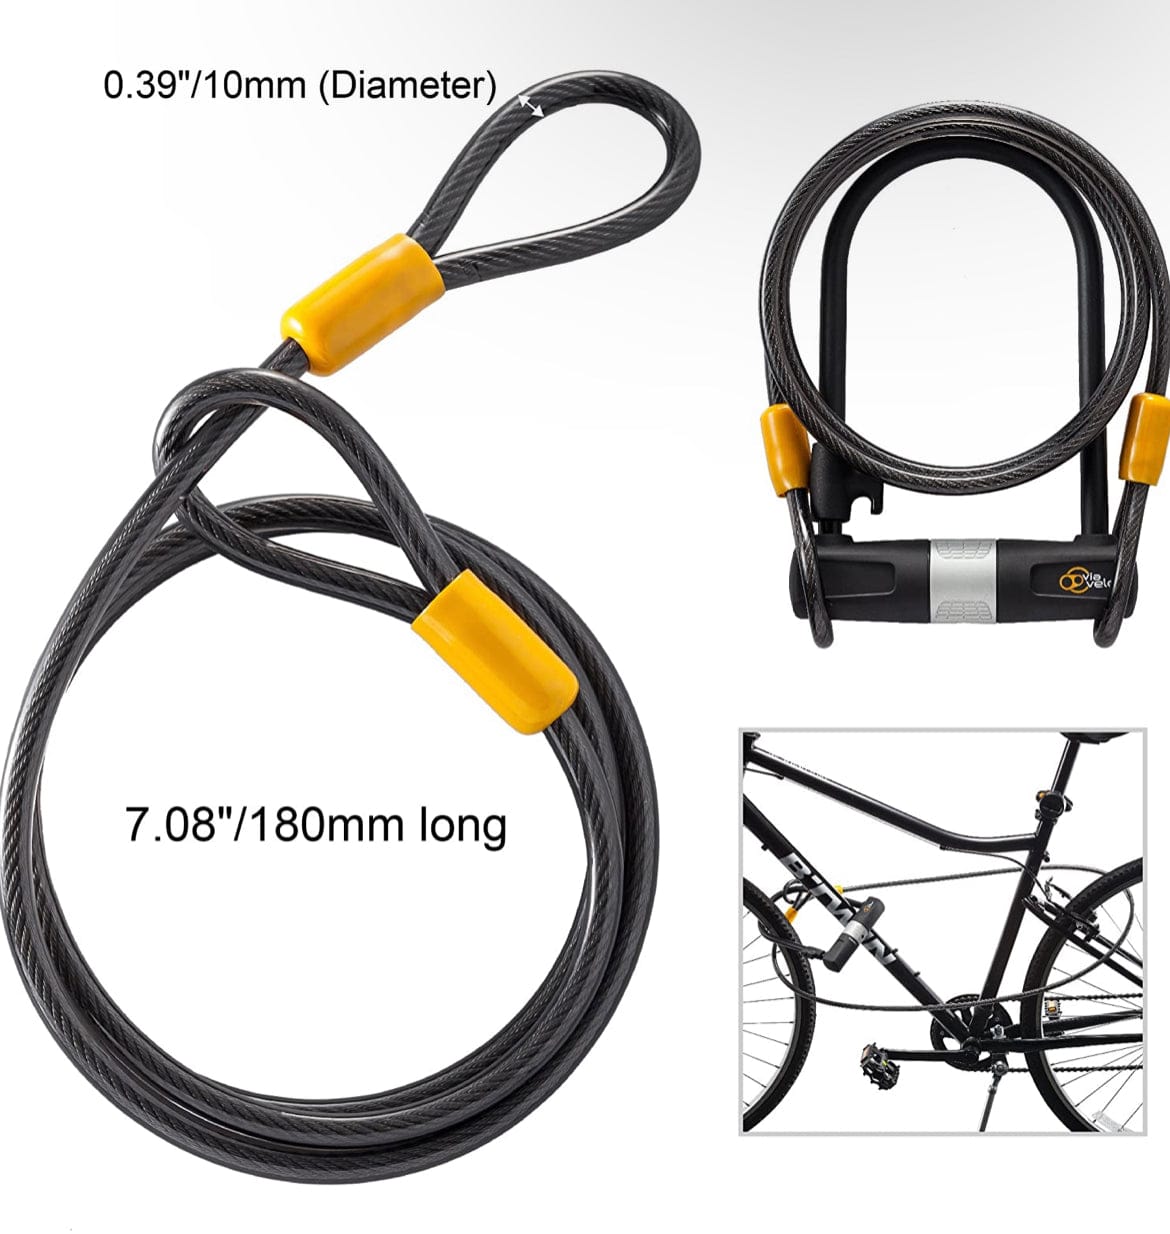 Bike U Lock with Cable - Via Velo Bike Lock Heavy Duty Bicycle U-Lock, - TopRideElectric TopRideElectric